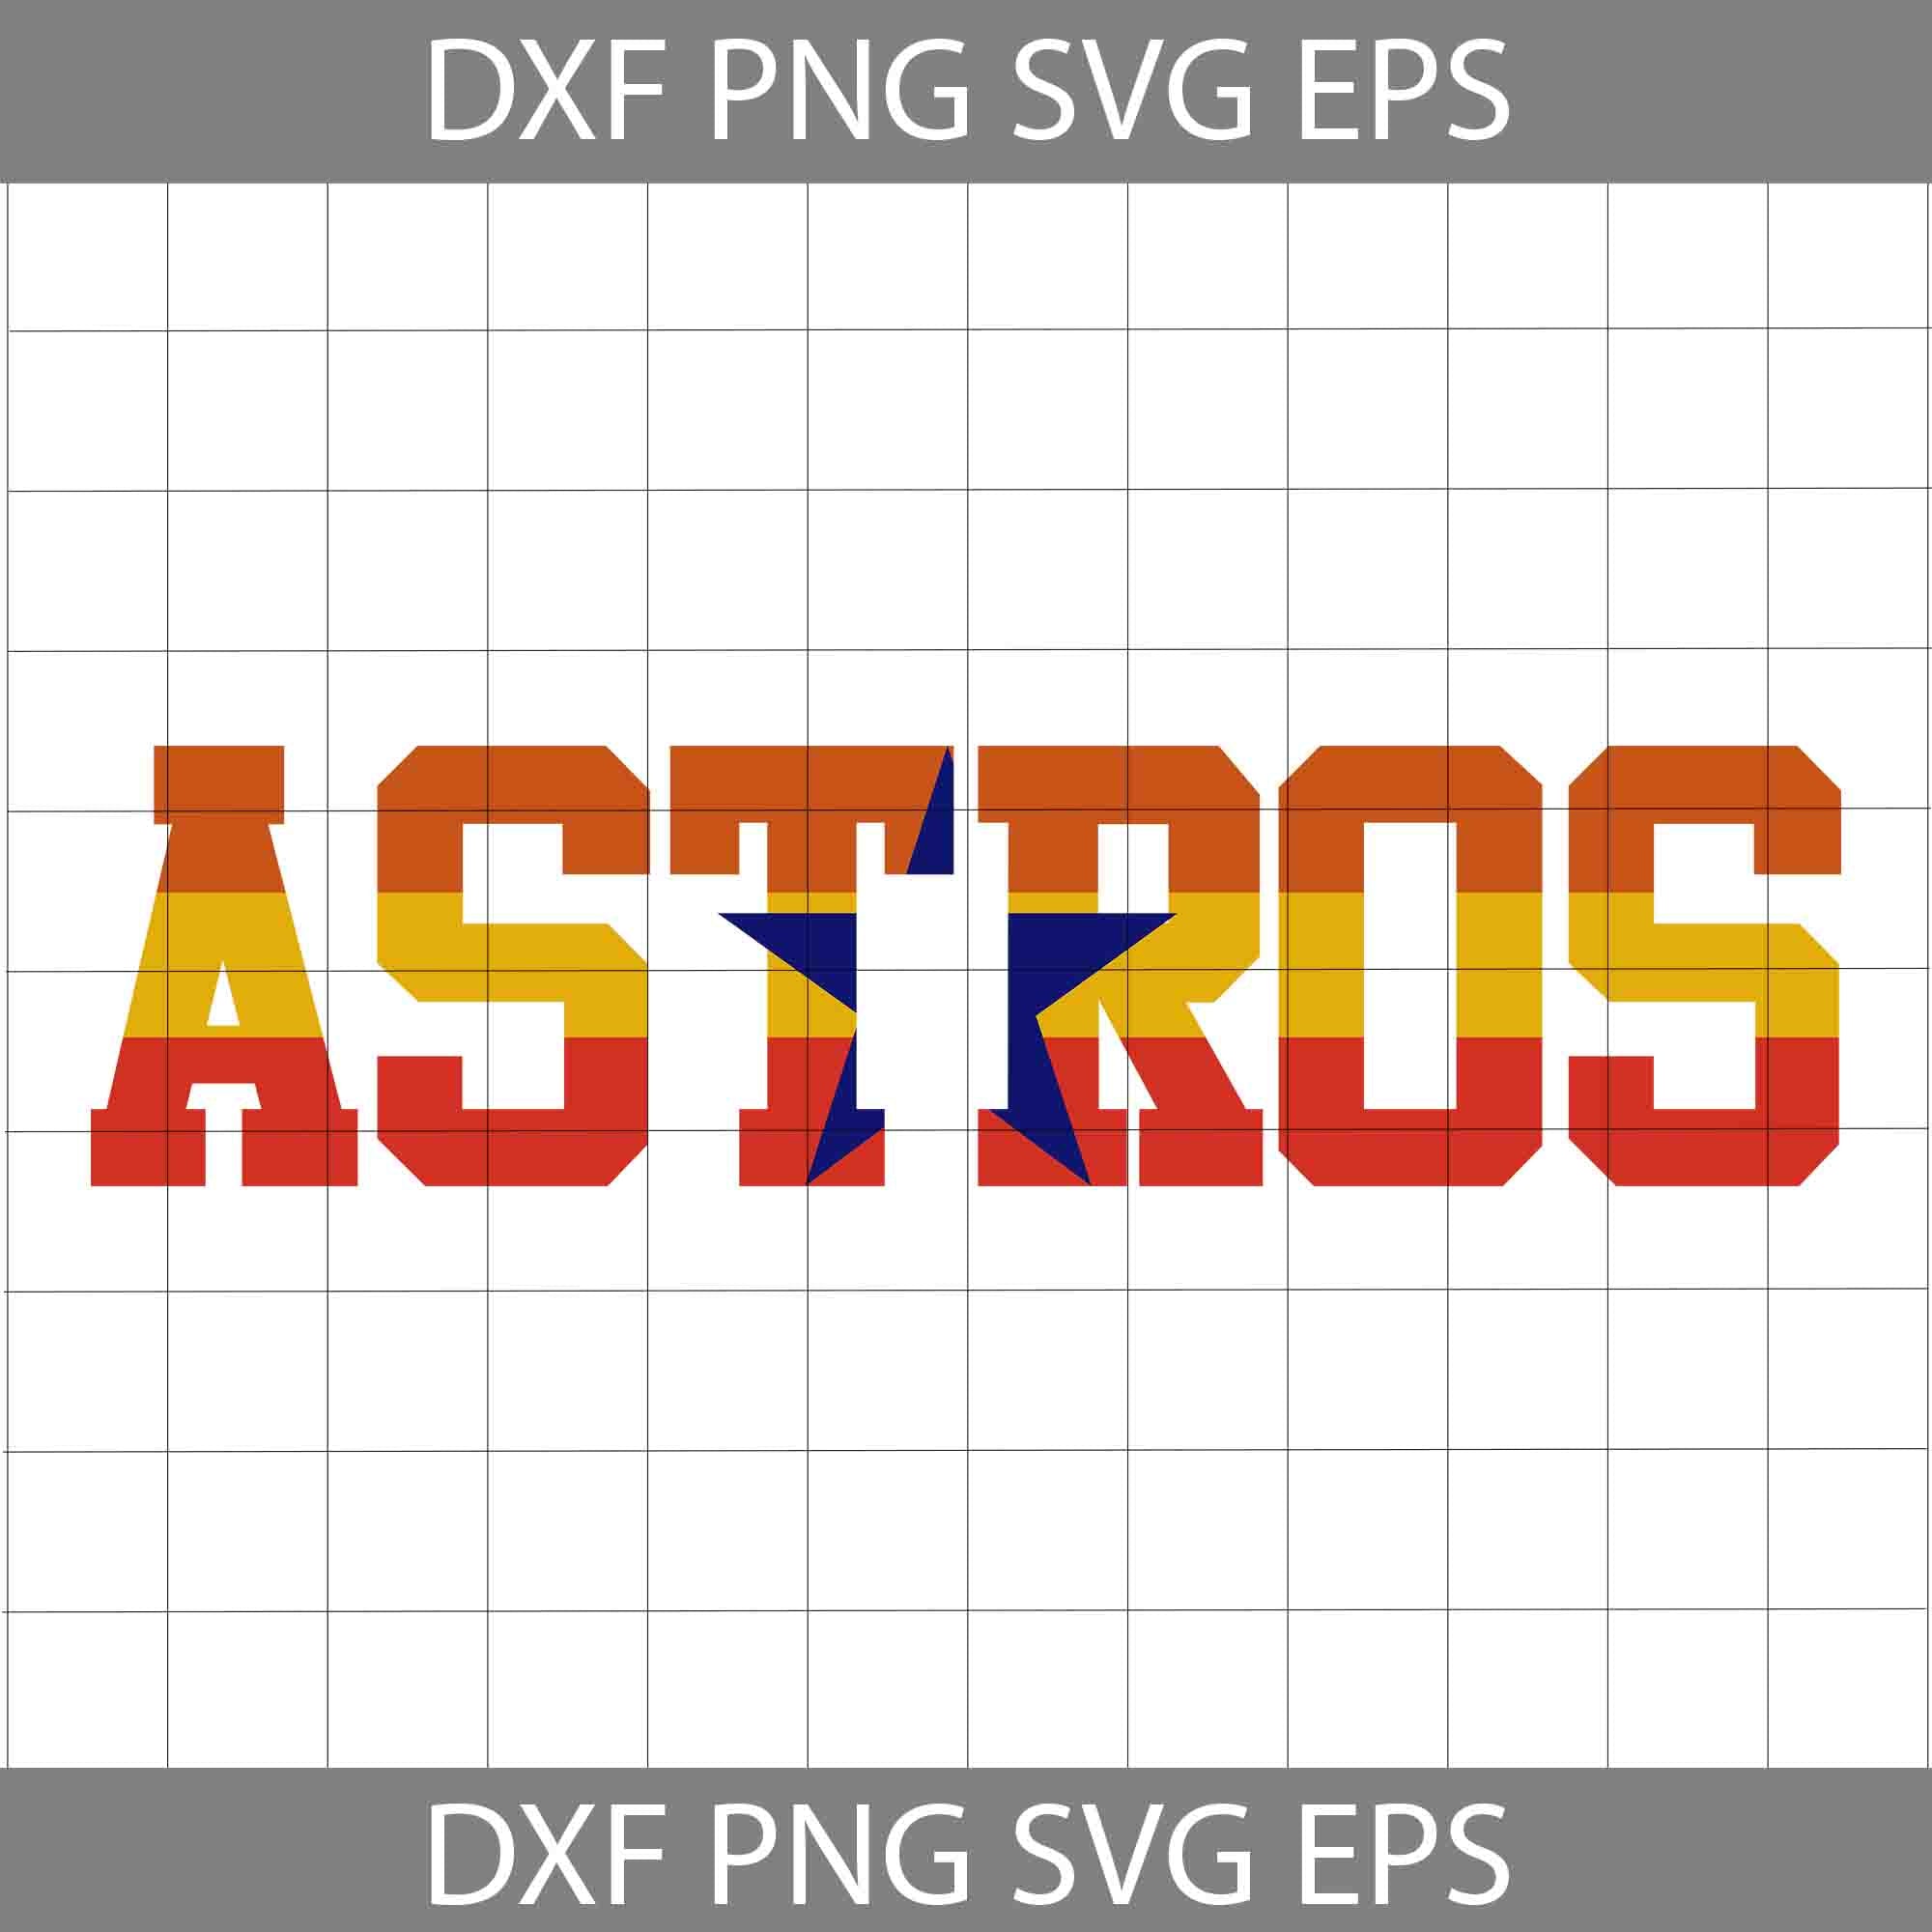 Houston Astros Logo, Svg Png Dxf Eps Digital Files - free svg files for  cricut